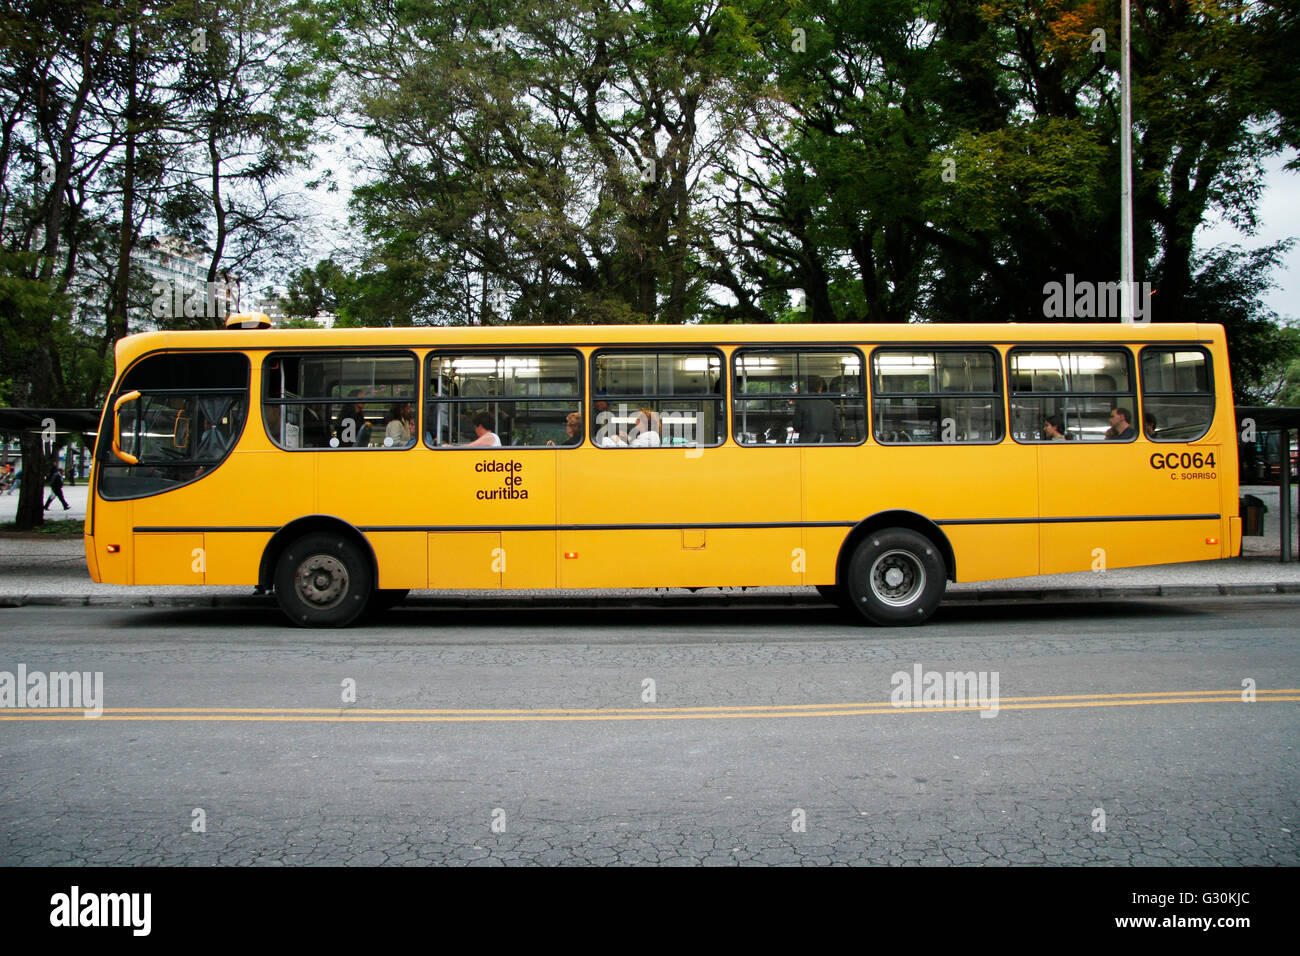 South America, Brazil, Parana, Cidade de Curitiba, yellow single-decker city bus, side view Stock Photo